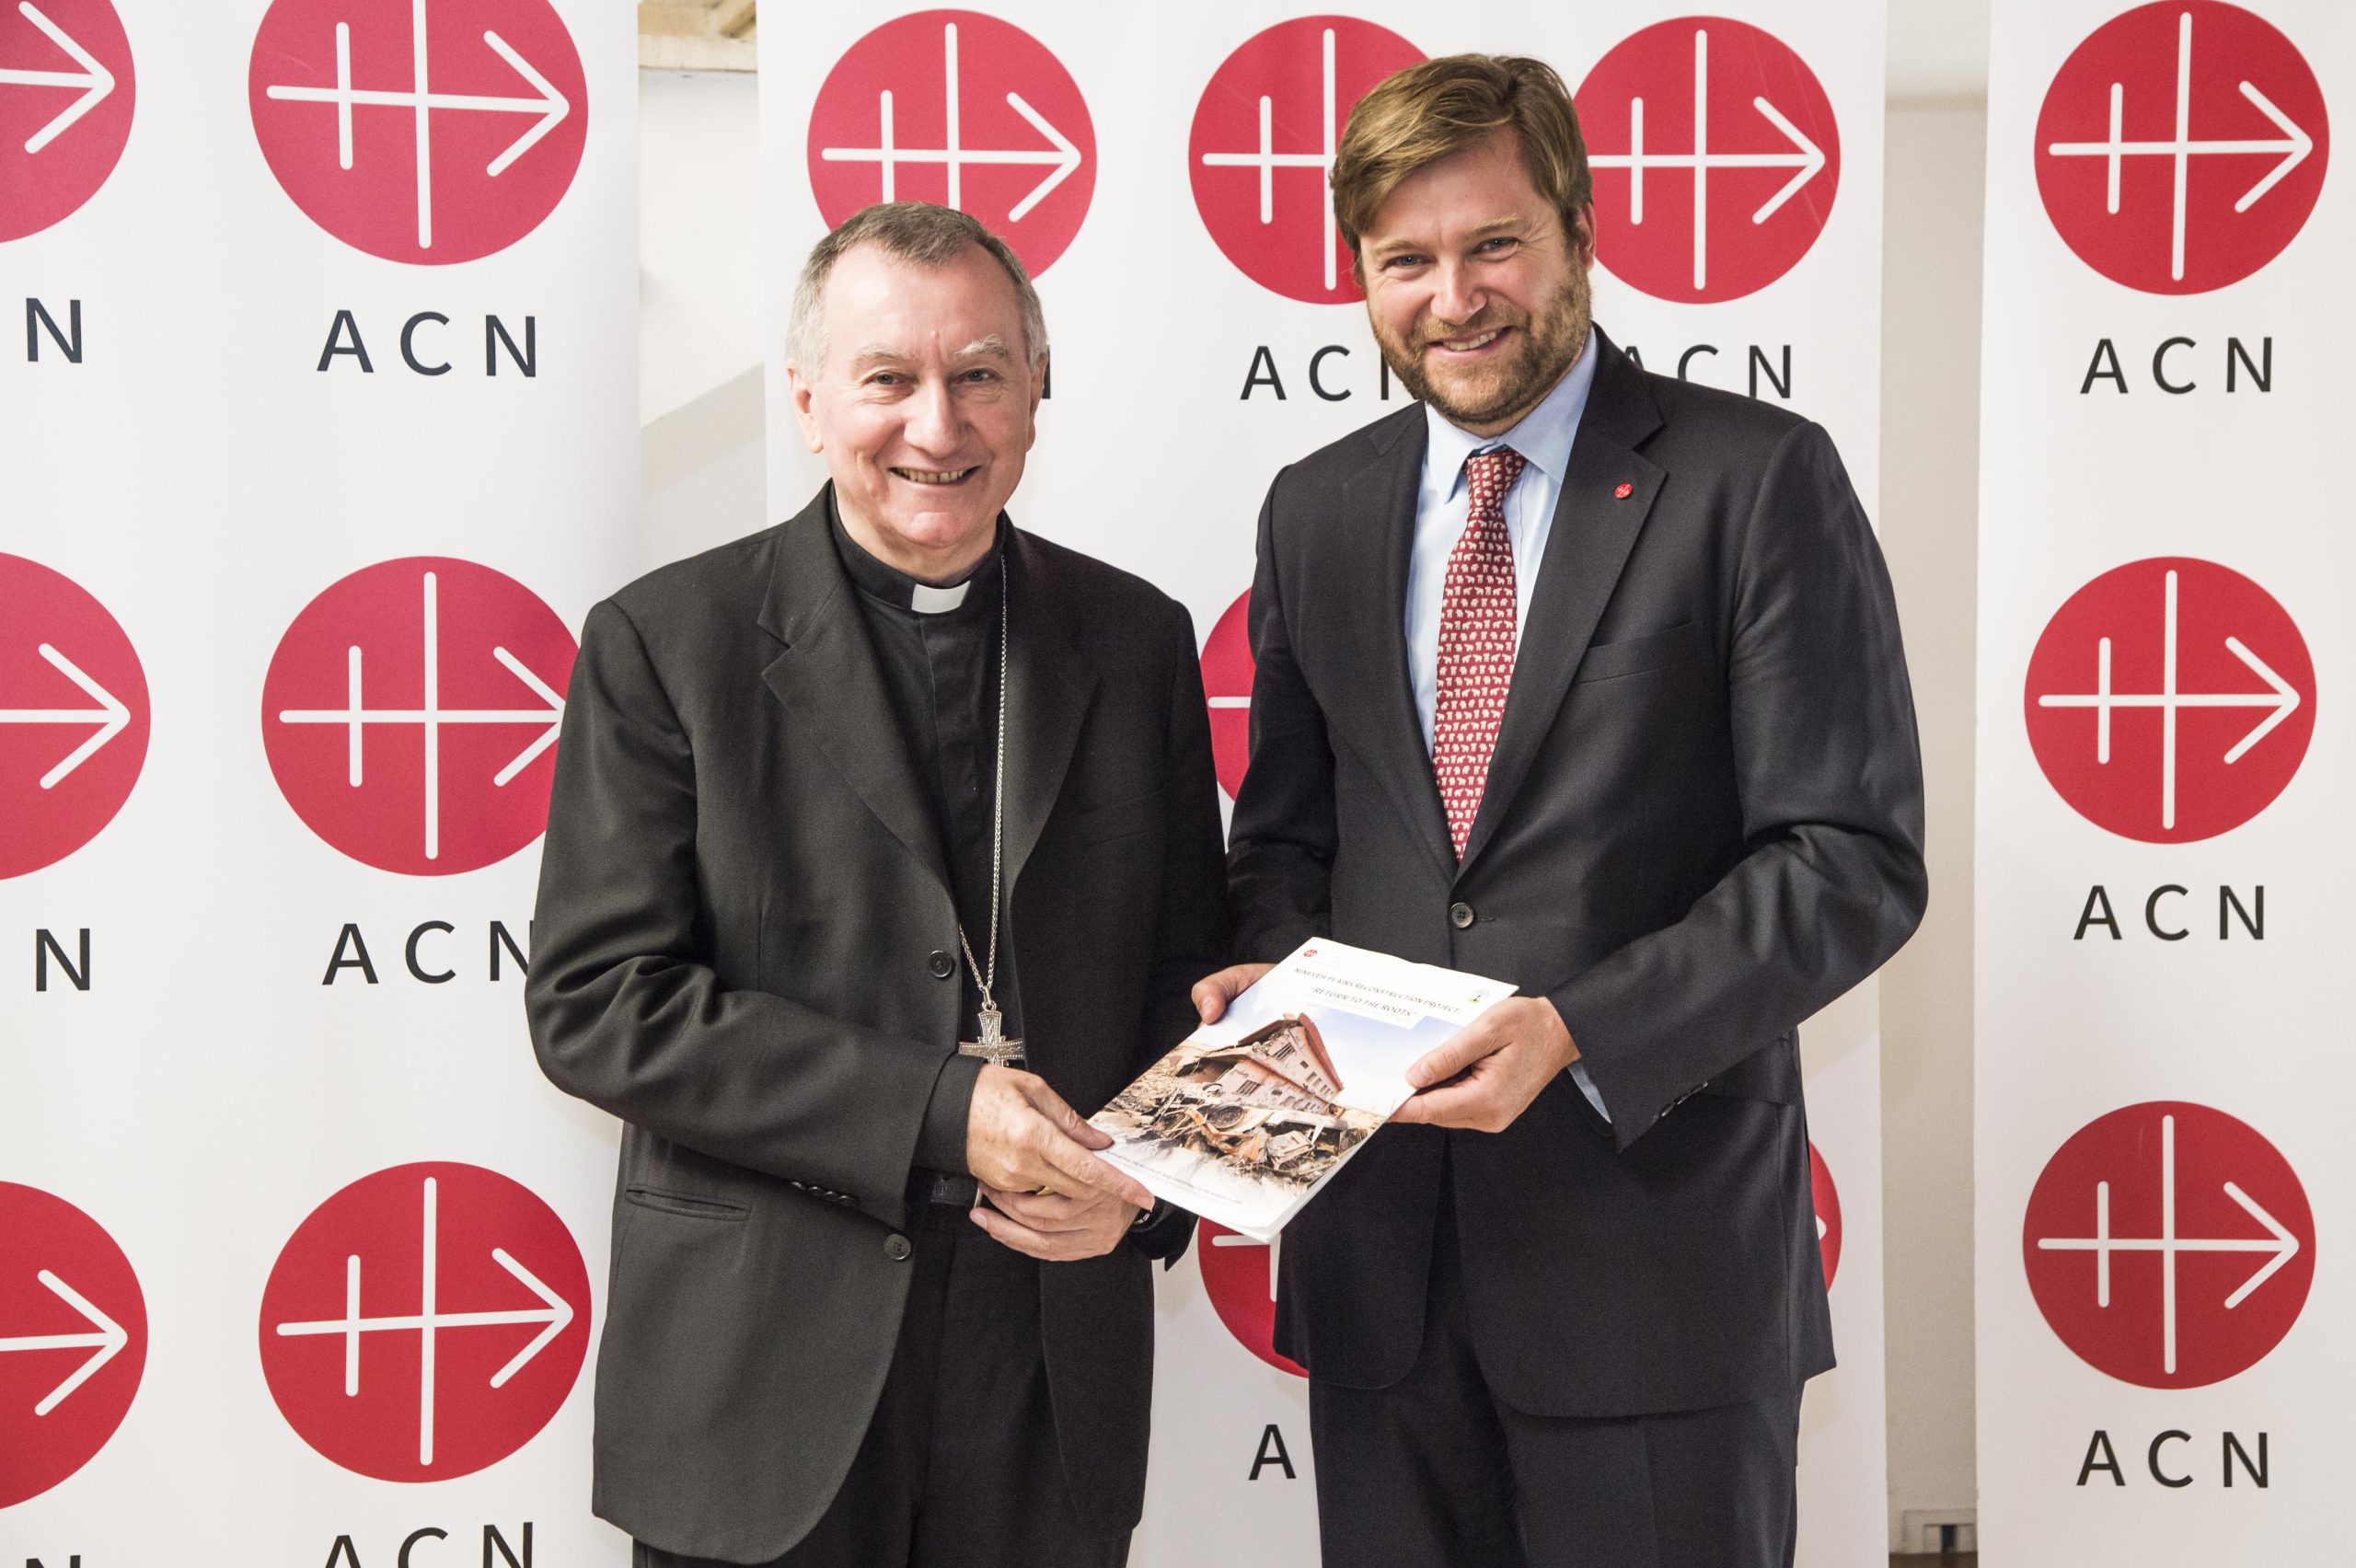 Vatican Secretary of State Cardinal Pietro Parolin with ACN’s international general secretary Philipp Ozores